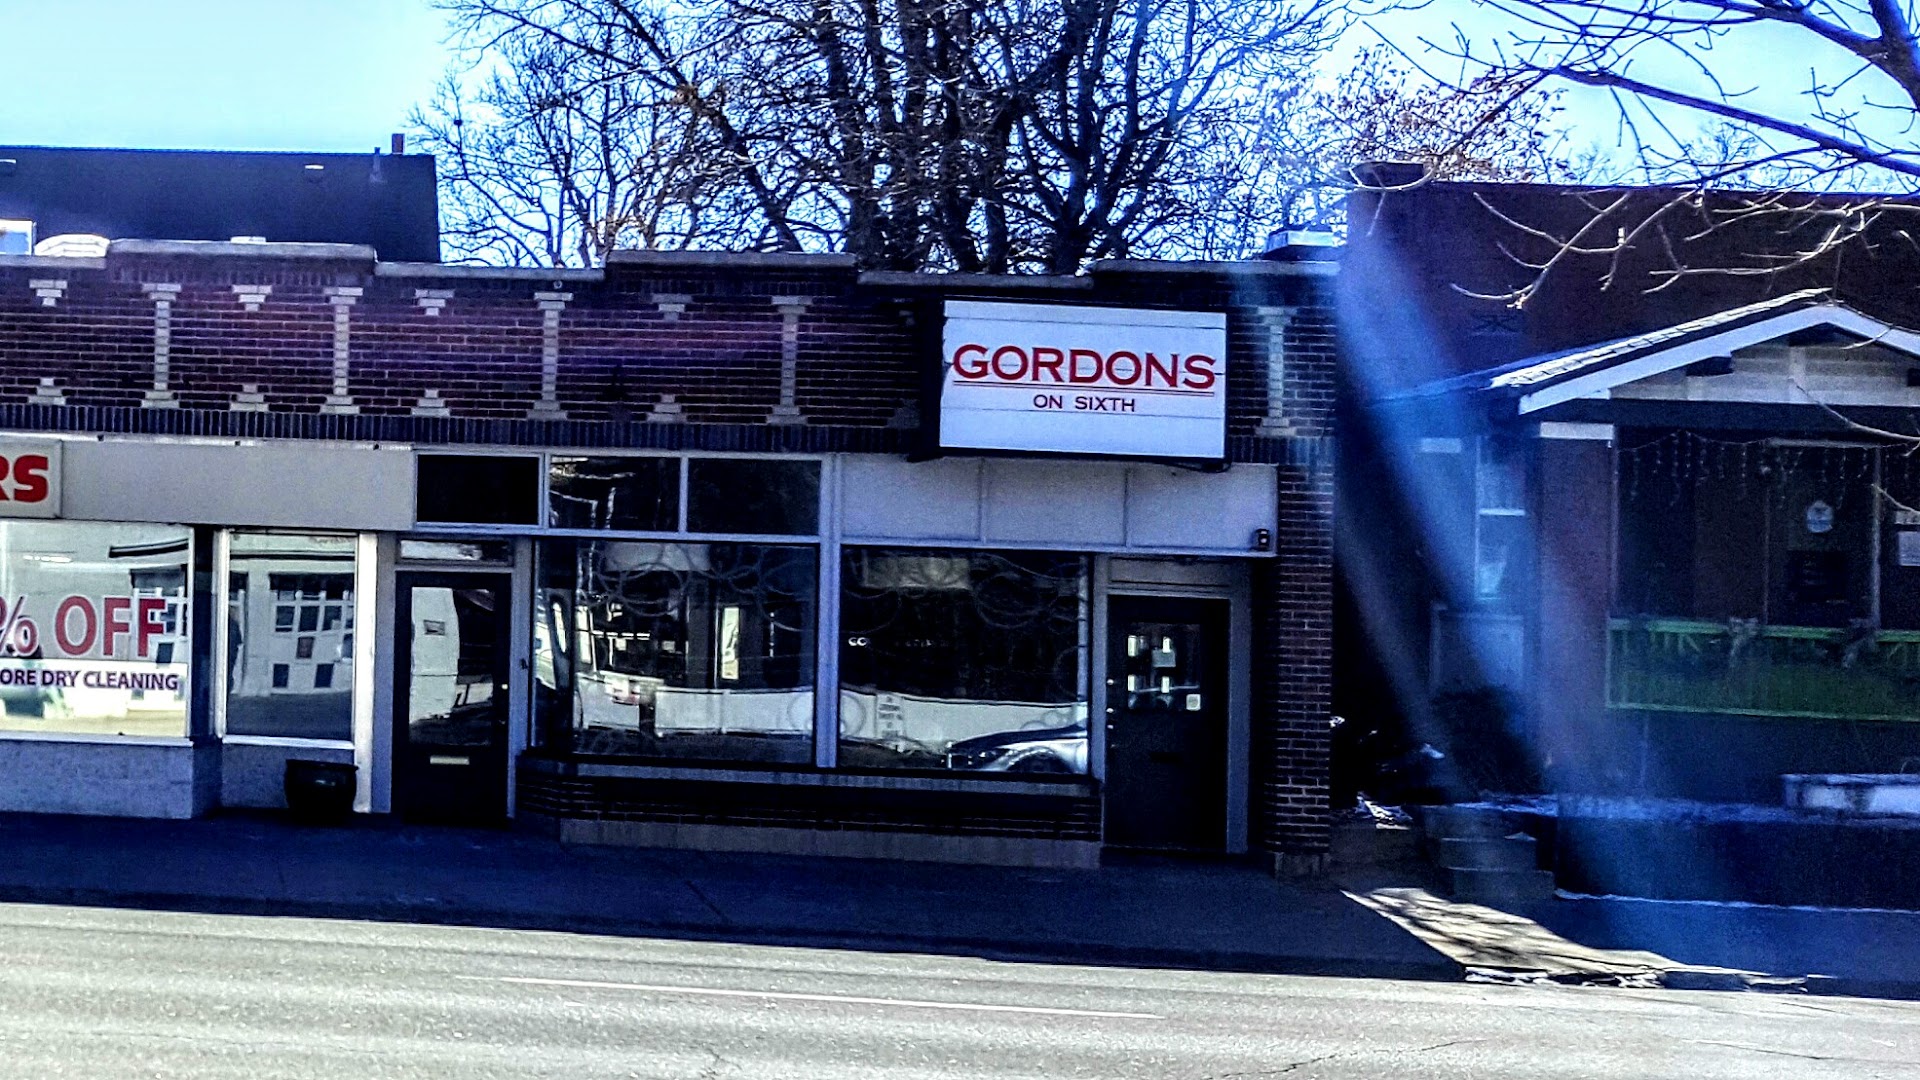 Gordon's on Sixth